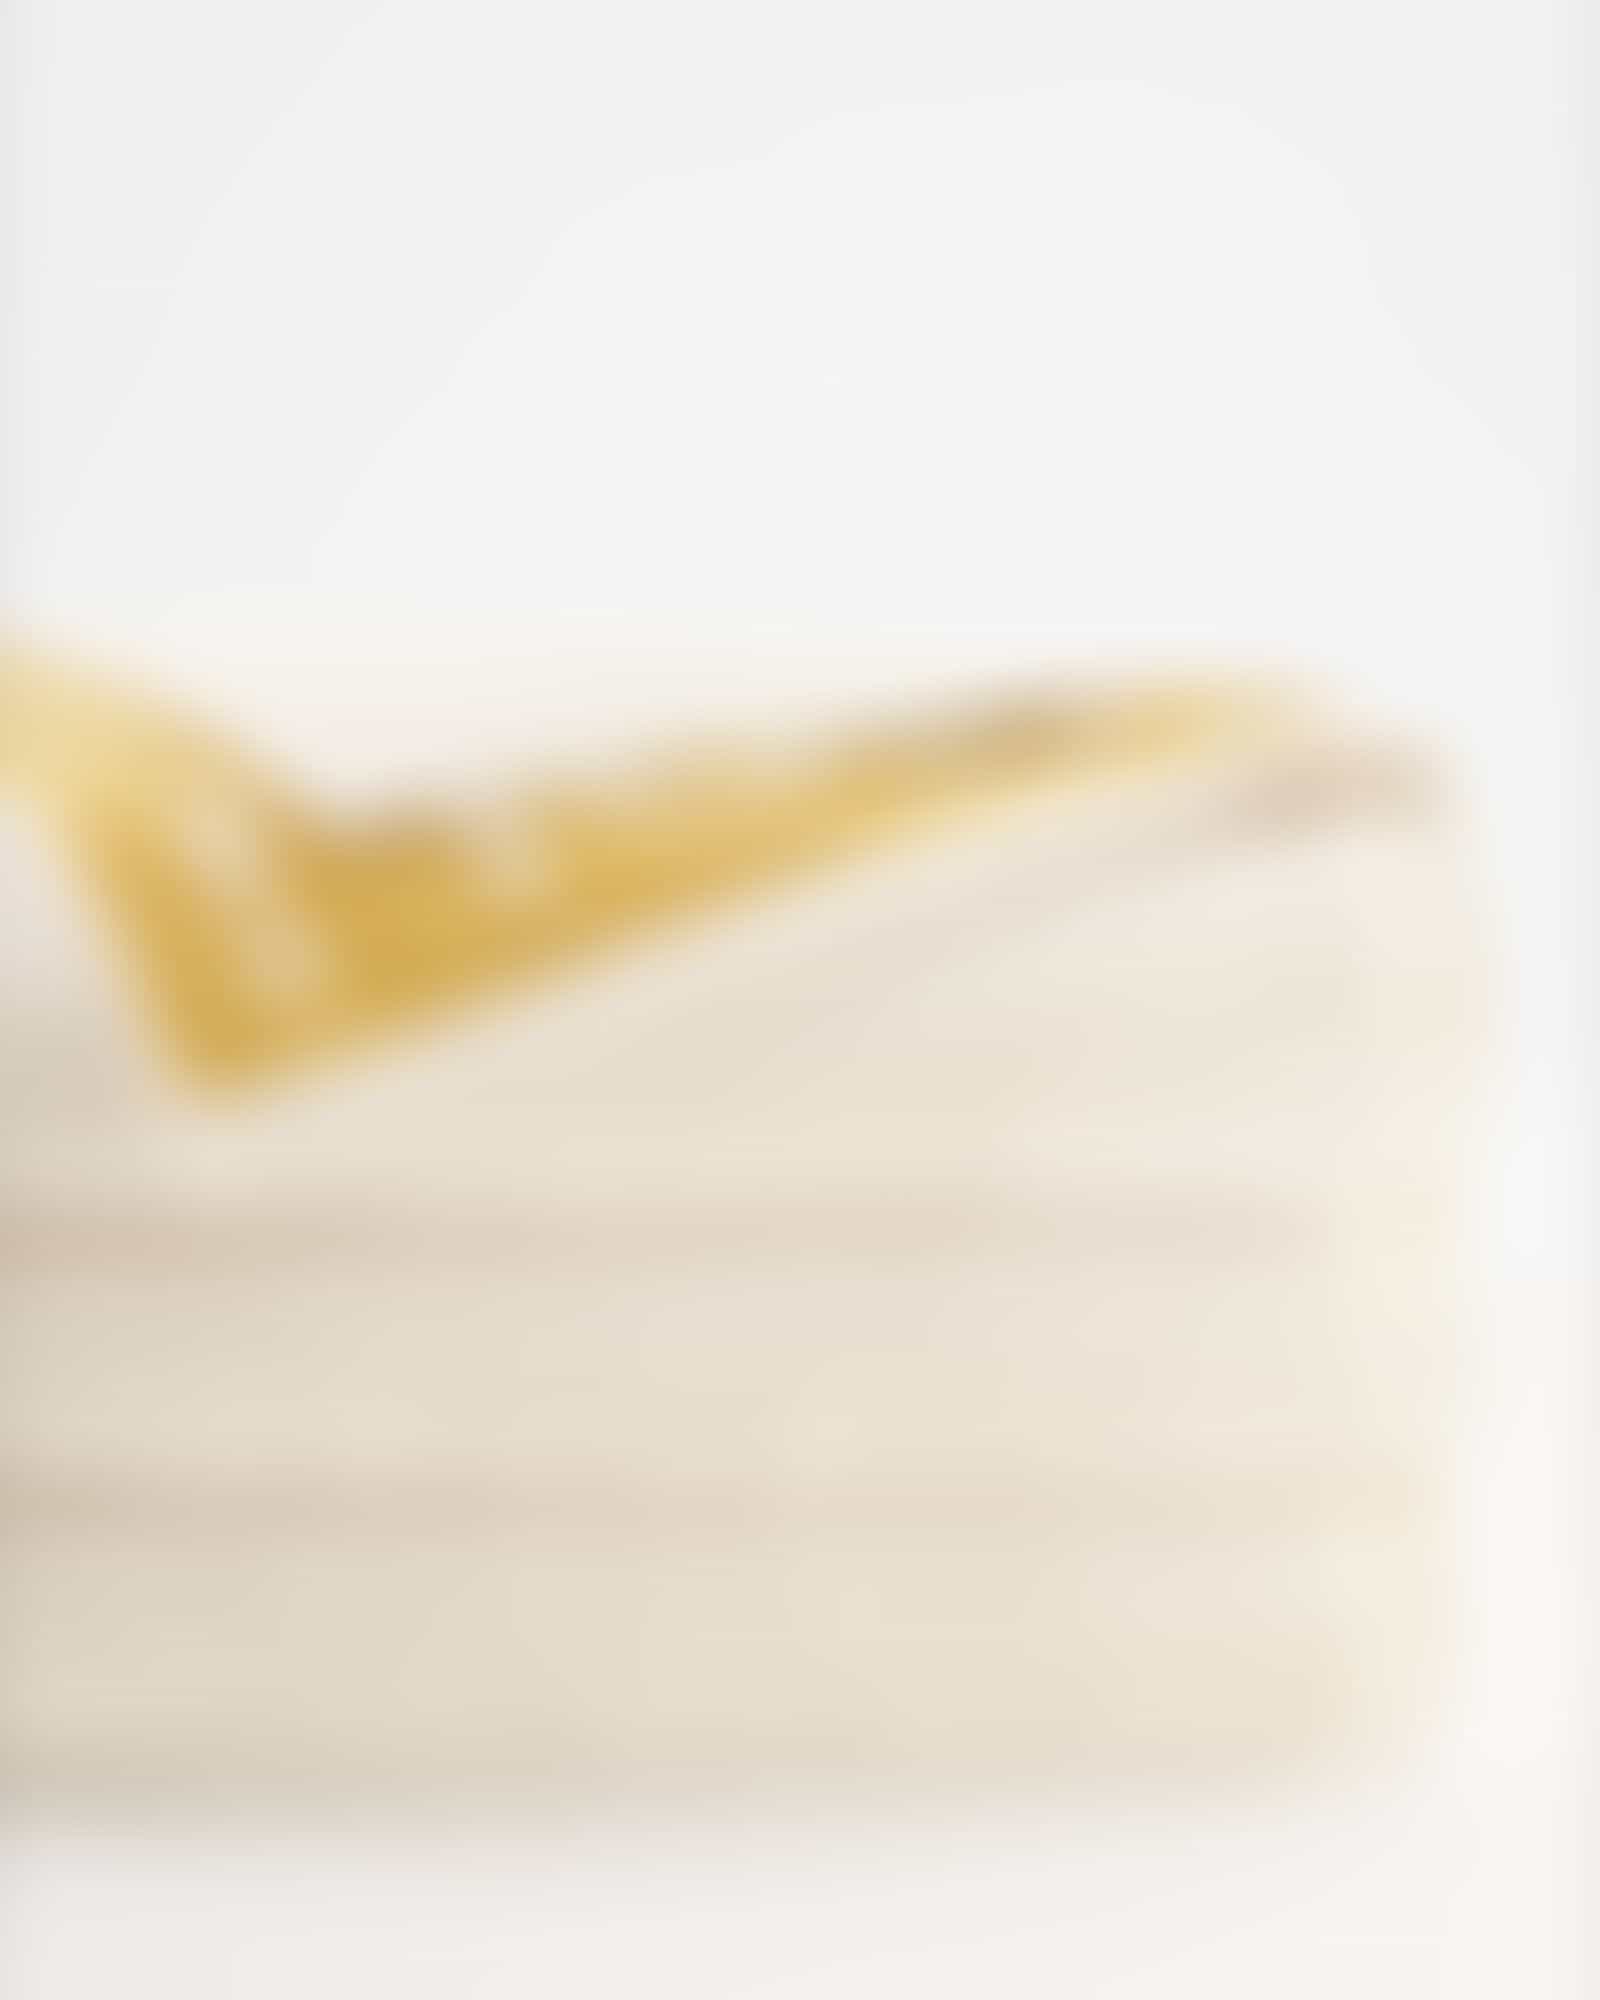 JOOP! Classic - Doubleface 1600 - Farbe: Amber - 35 - Waschhandschuh 16x22 cm Detailbild 2